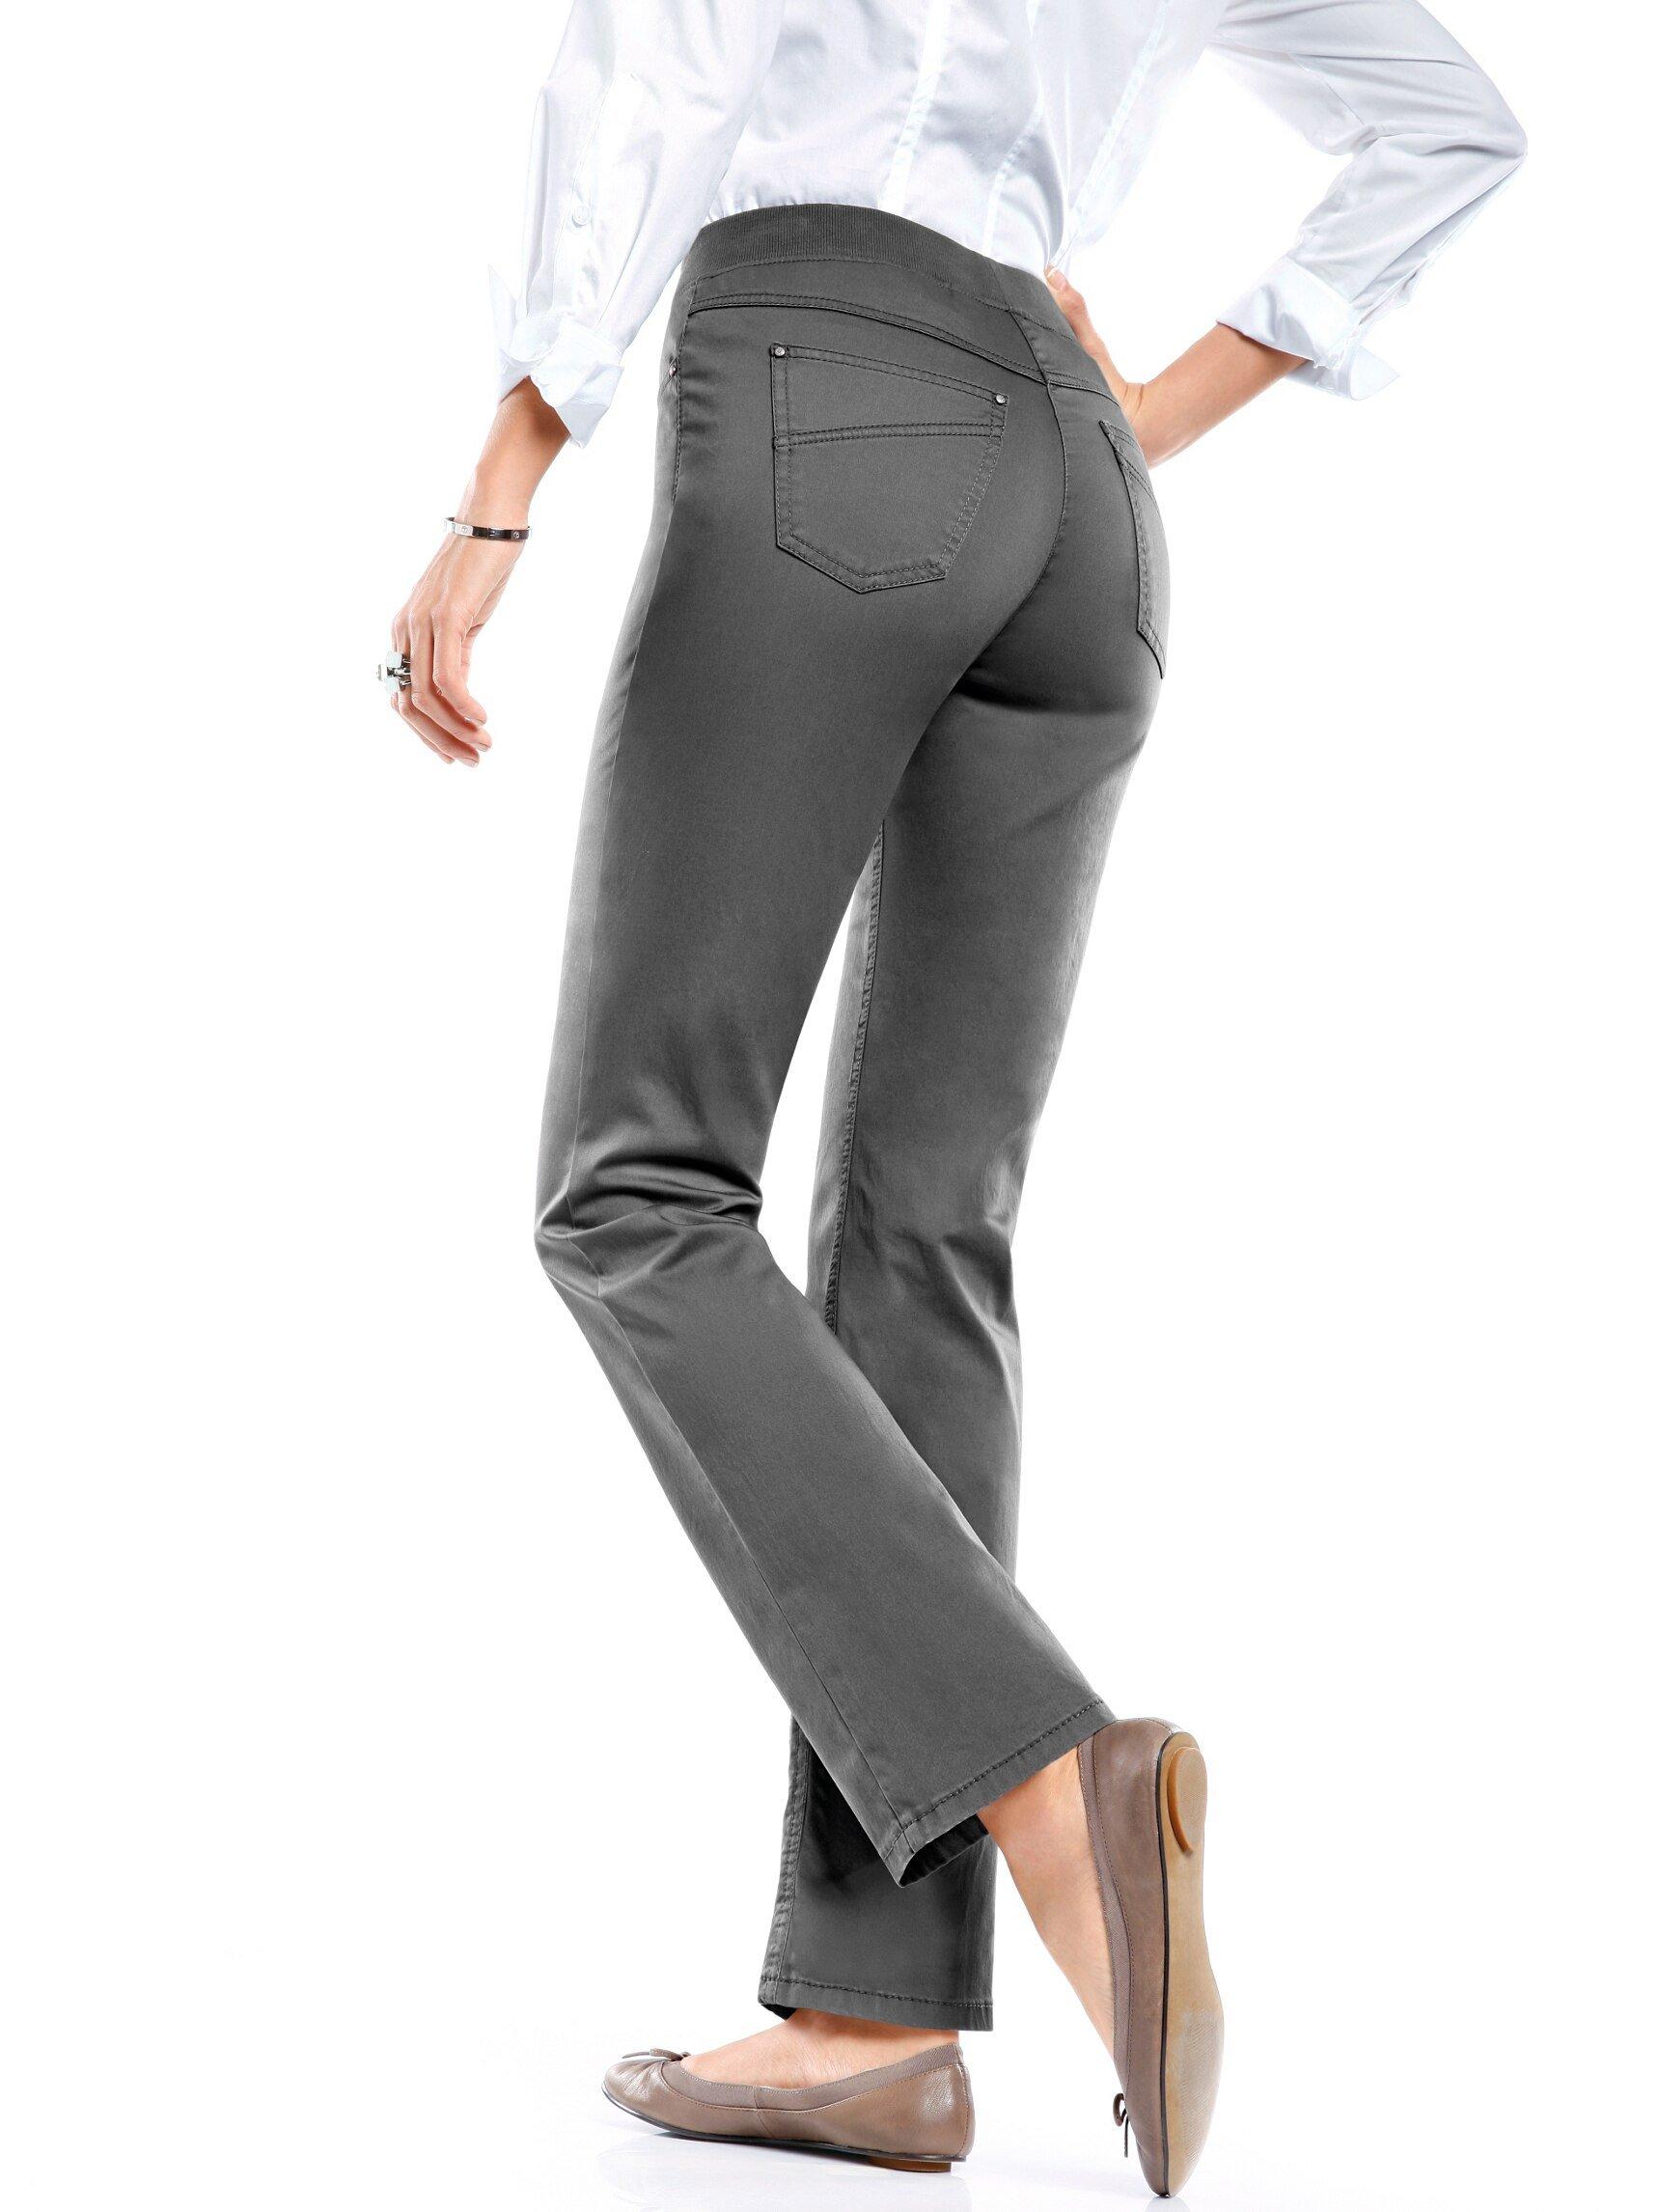 Raphaela by Brax - Le pantalon ProForm Slim modèle Pamina